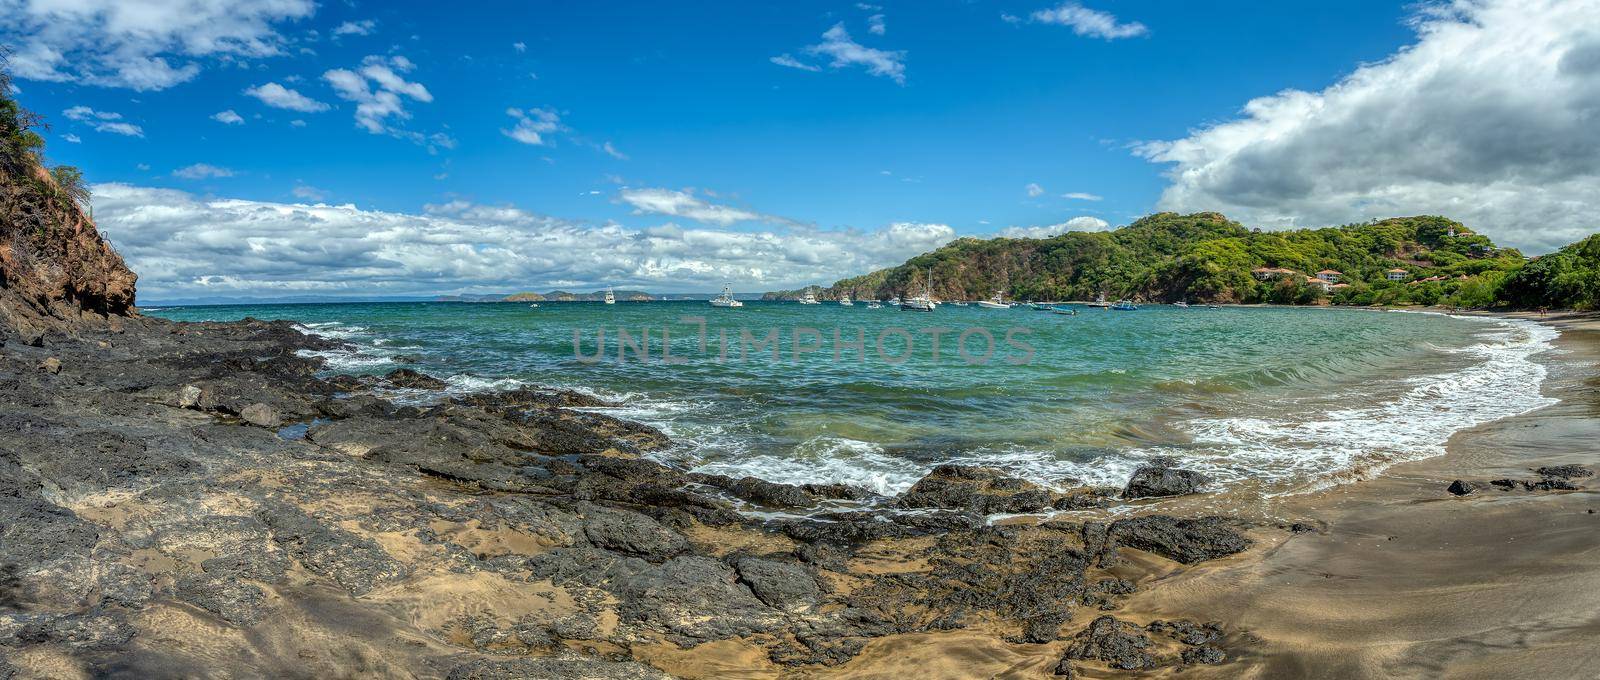 Playa Ocotal and Pacific ocean waves on rocky shore, El Coco Costa Rica by artush